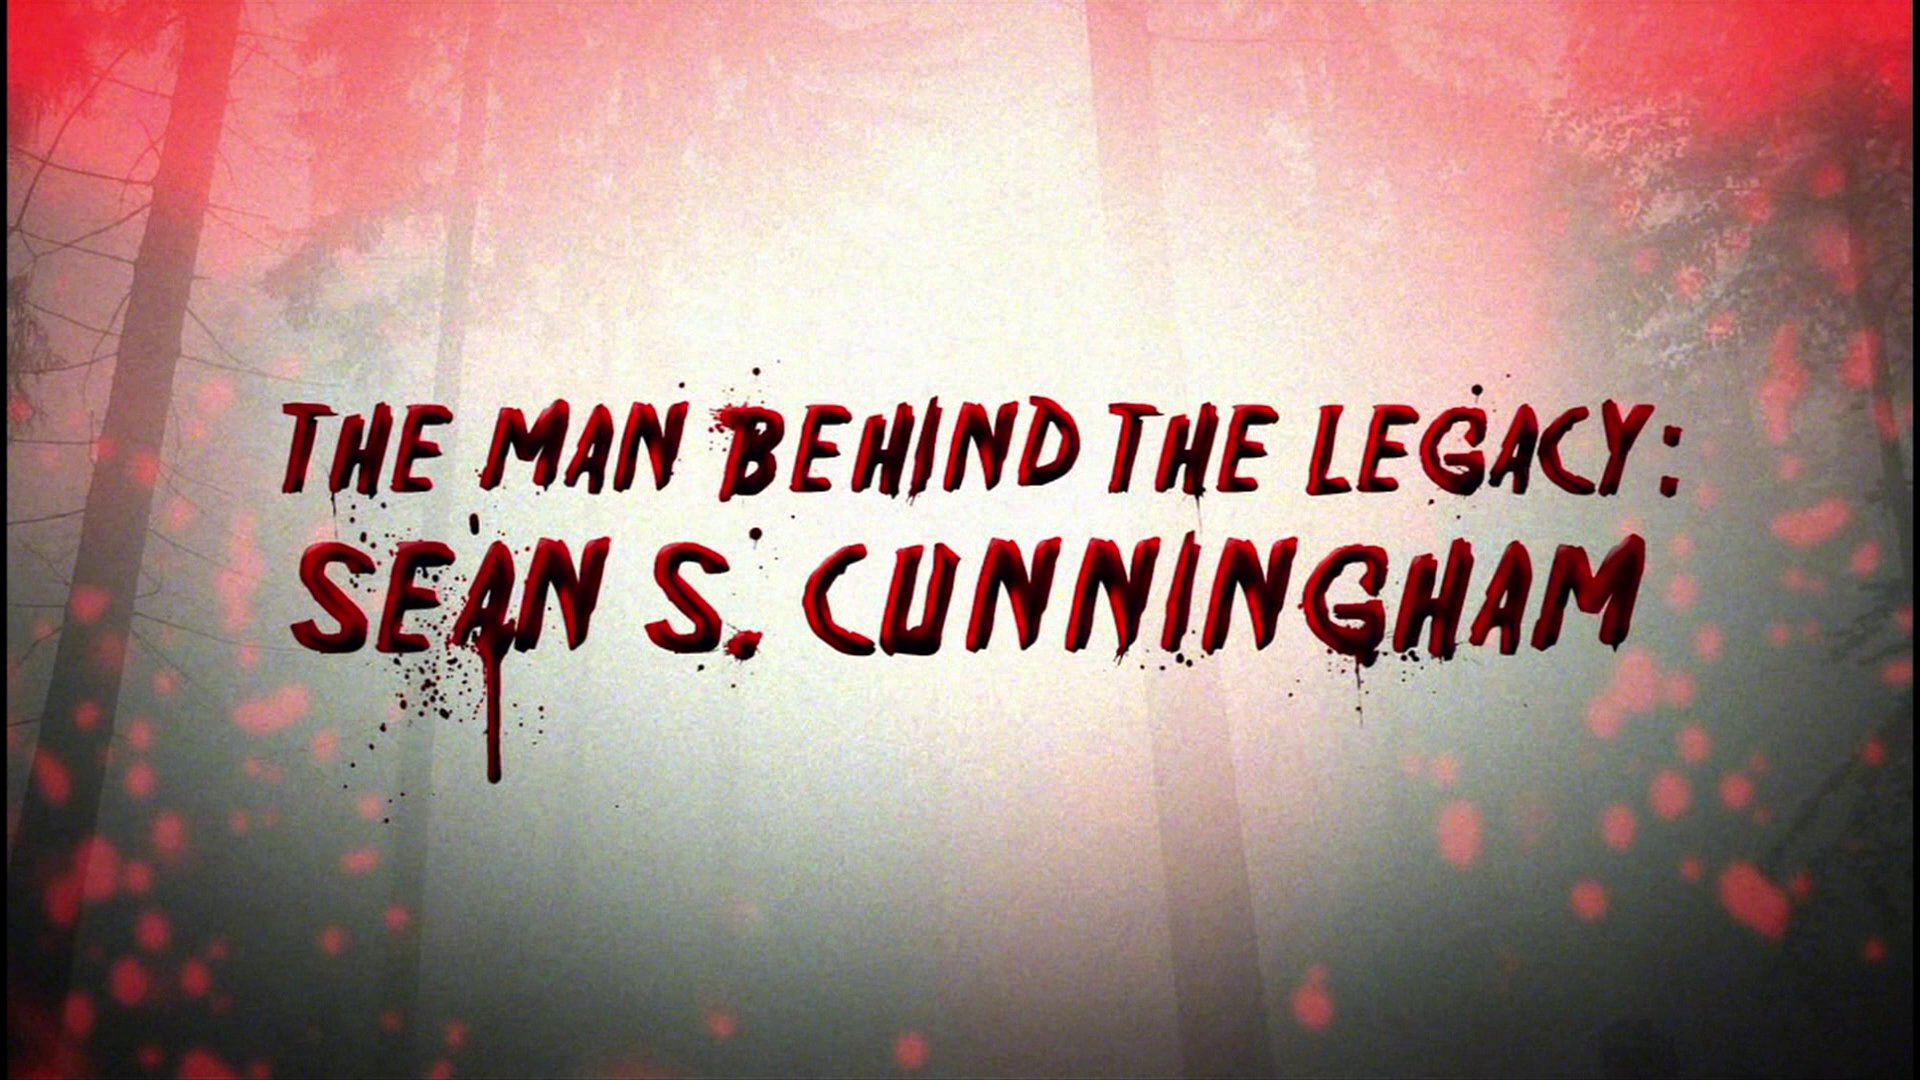 The Man Behind the Legacy Sean S. Cunningham